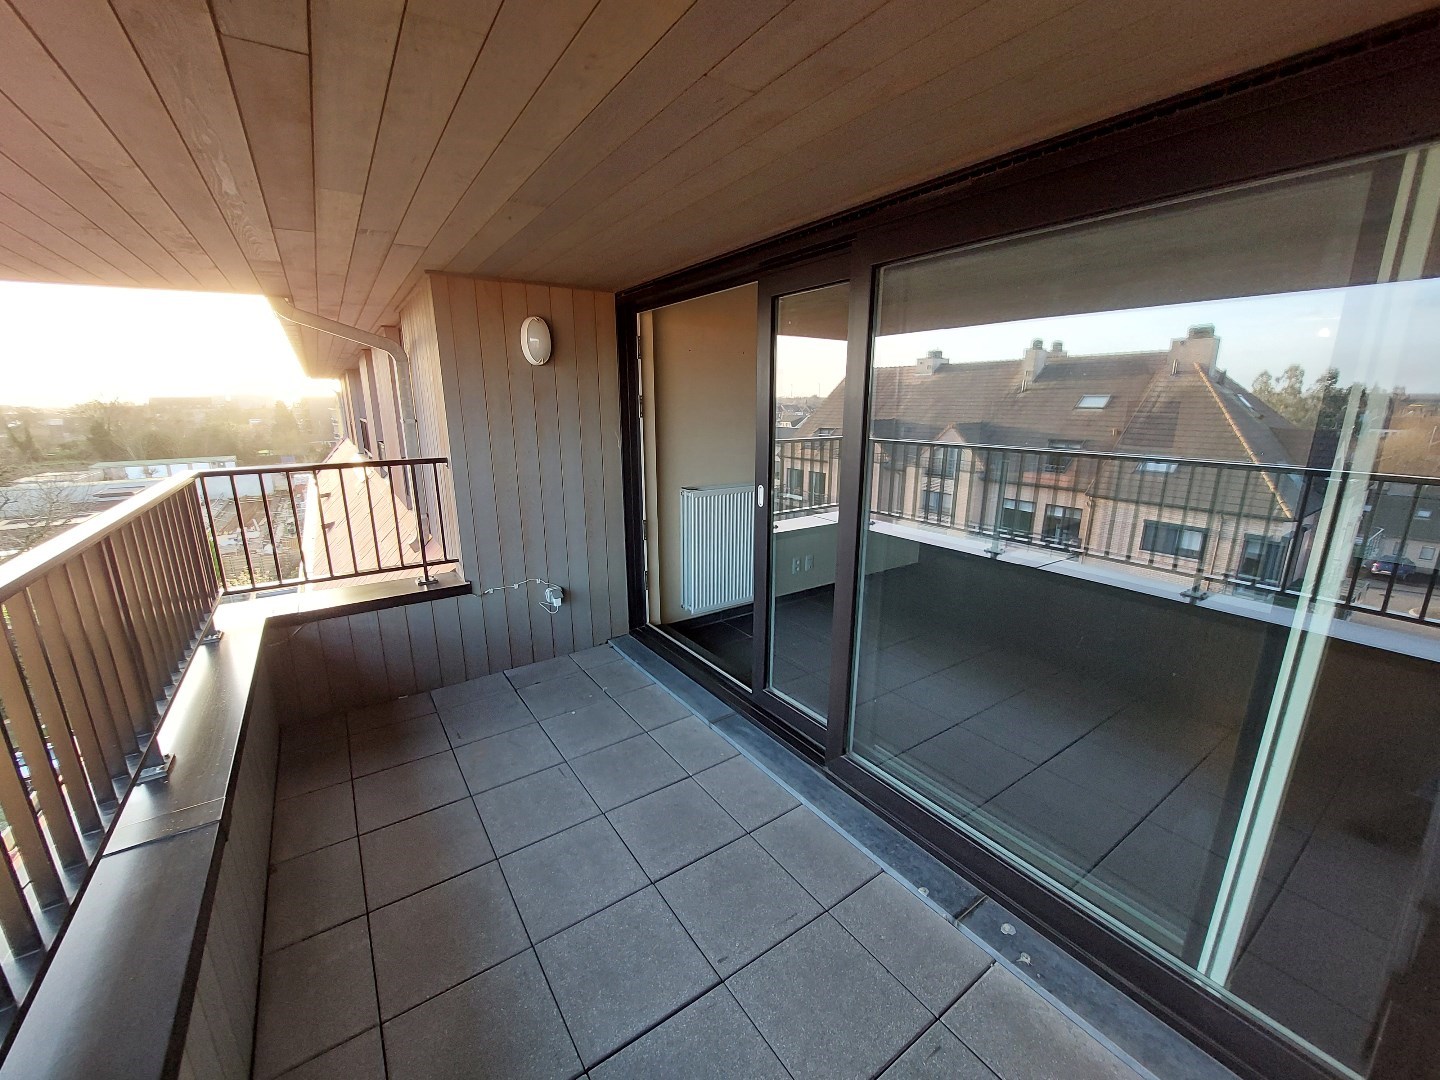 Recent appartement in residentie 't Zuid- 2 slaapkamers + terras + dubbele parking. foto 10